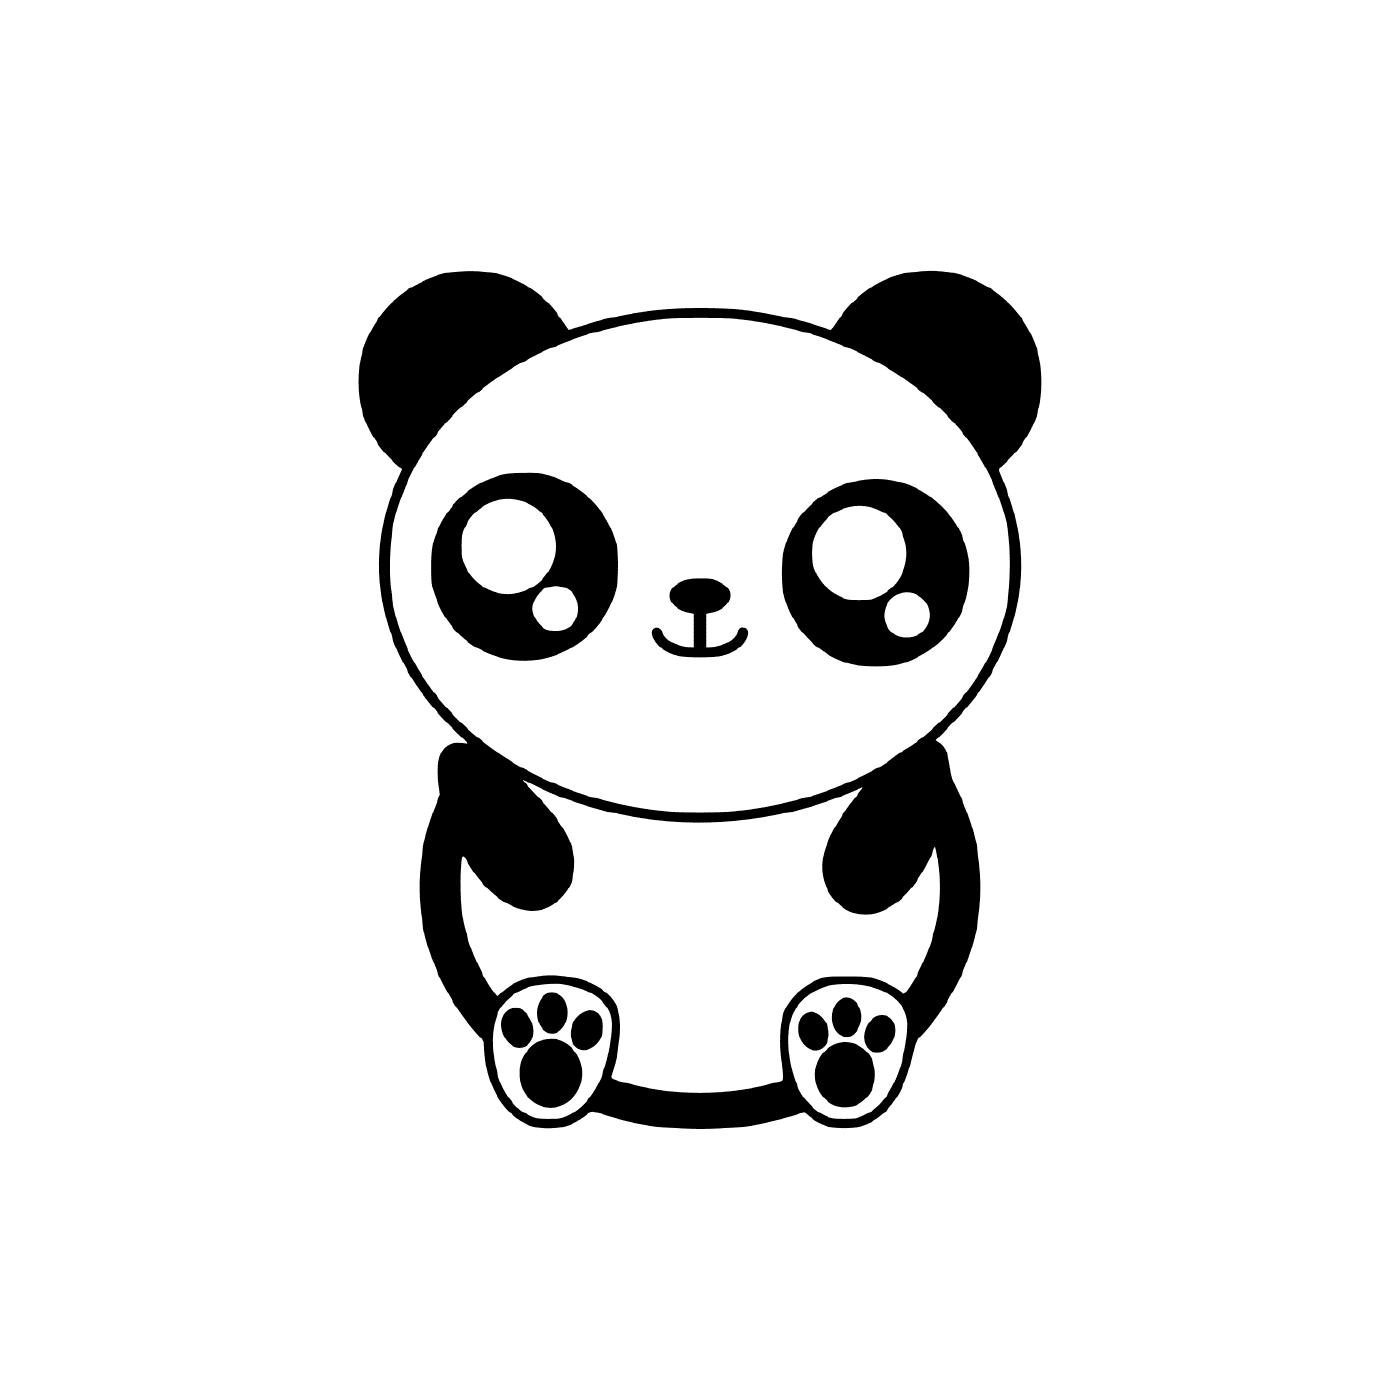  Um panda bonito 